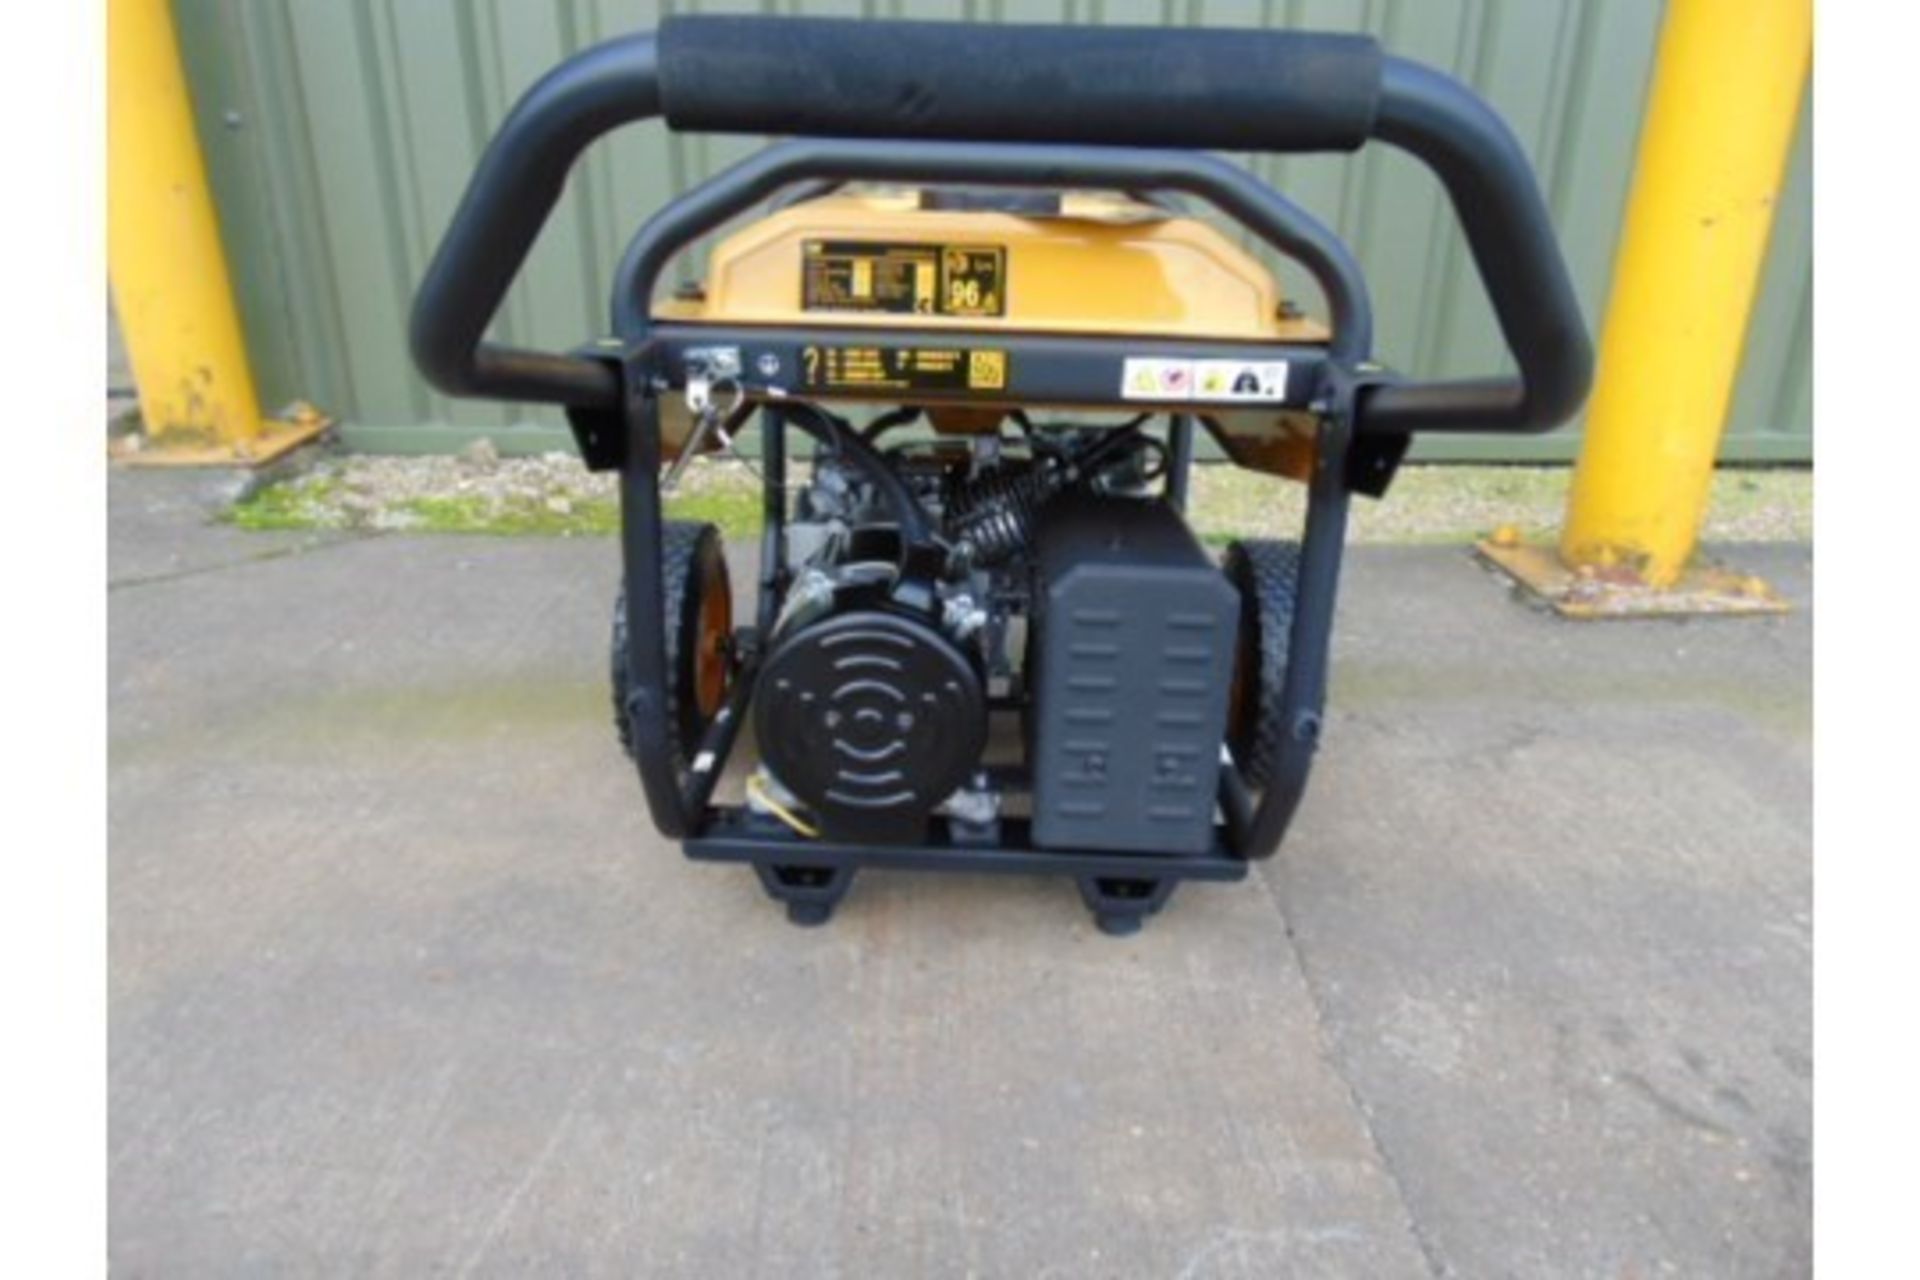 UNISSUED Caterpillar RP2500 Industrial Petrol Generator Set - Image 4 of 10